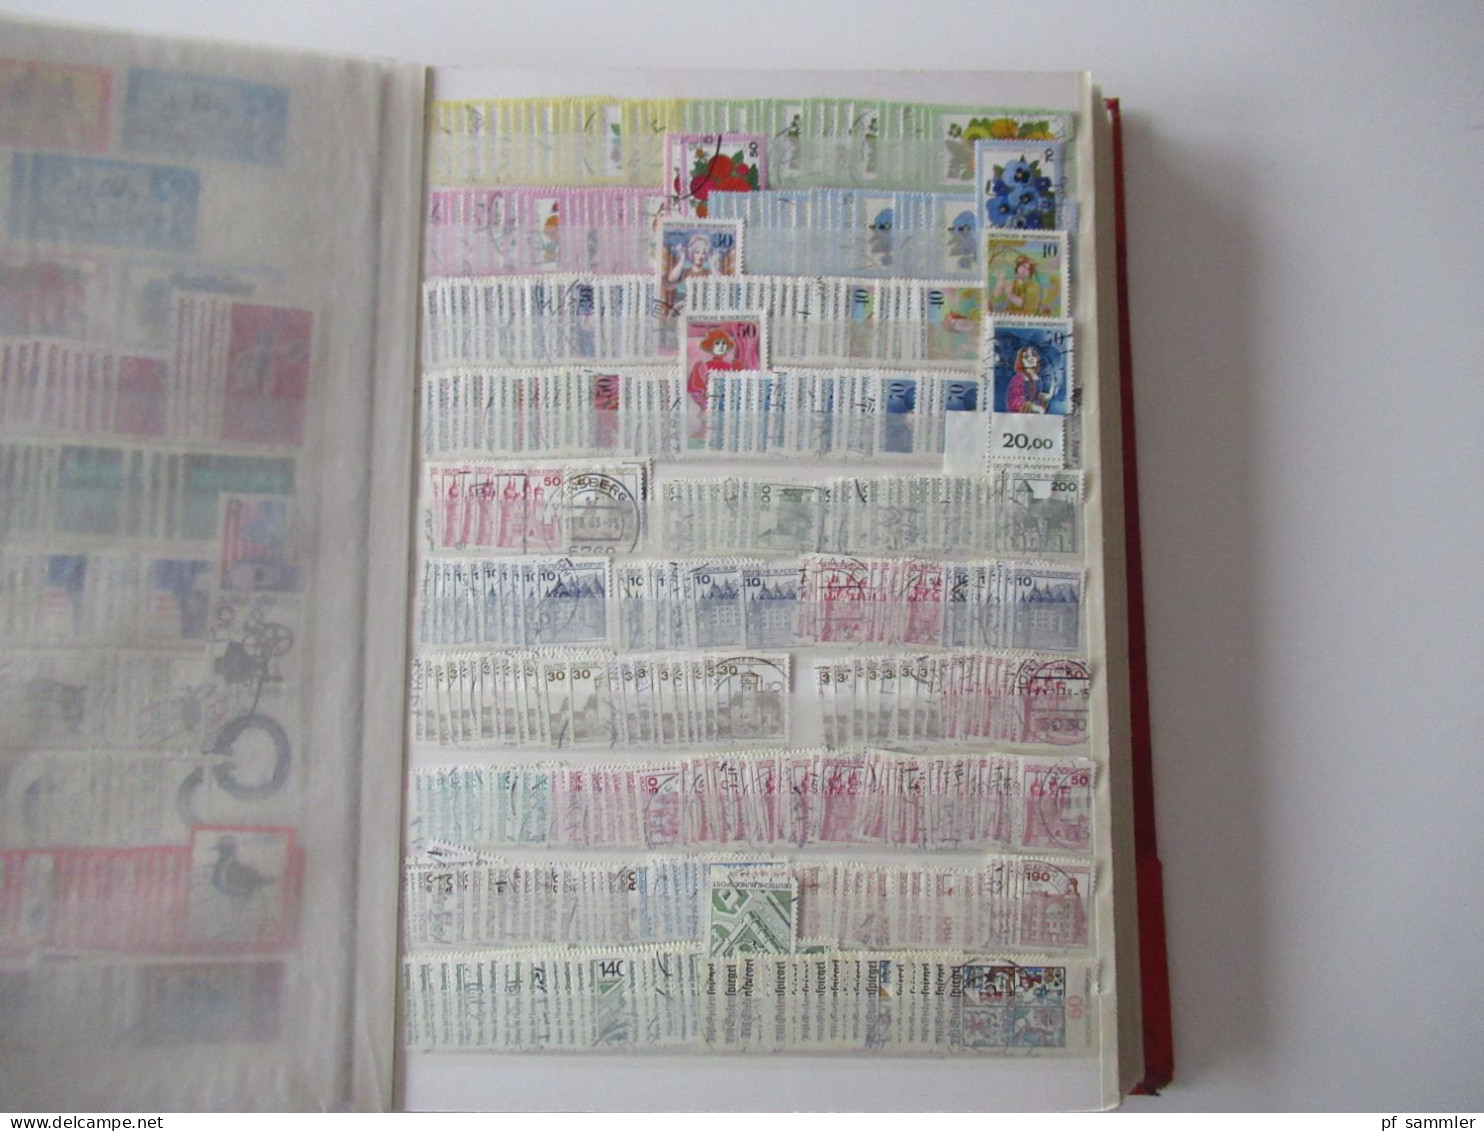 Sammlung / interessantes Album / Lagerbuch BRD 1957 - 1983 tausende gestempelte Marken  / absolute Fundgrube!